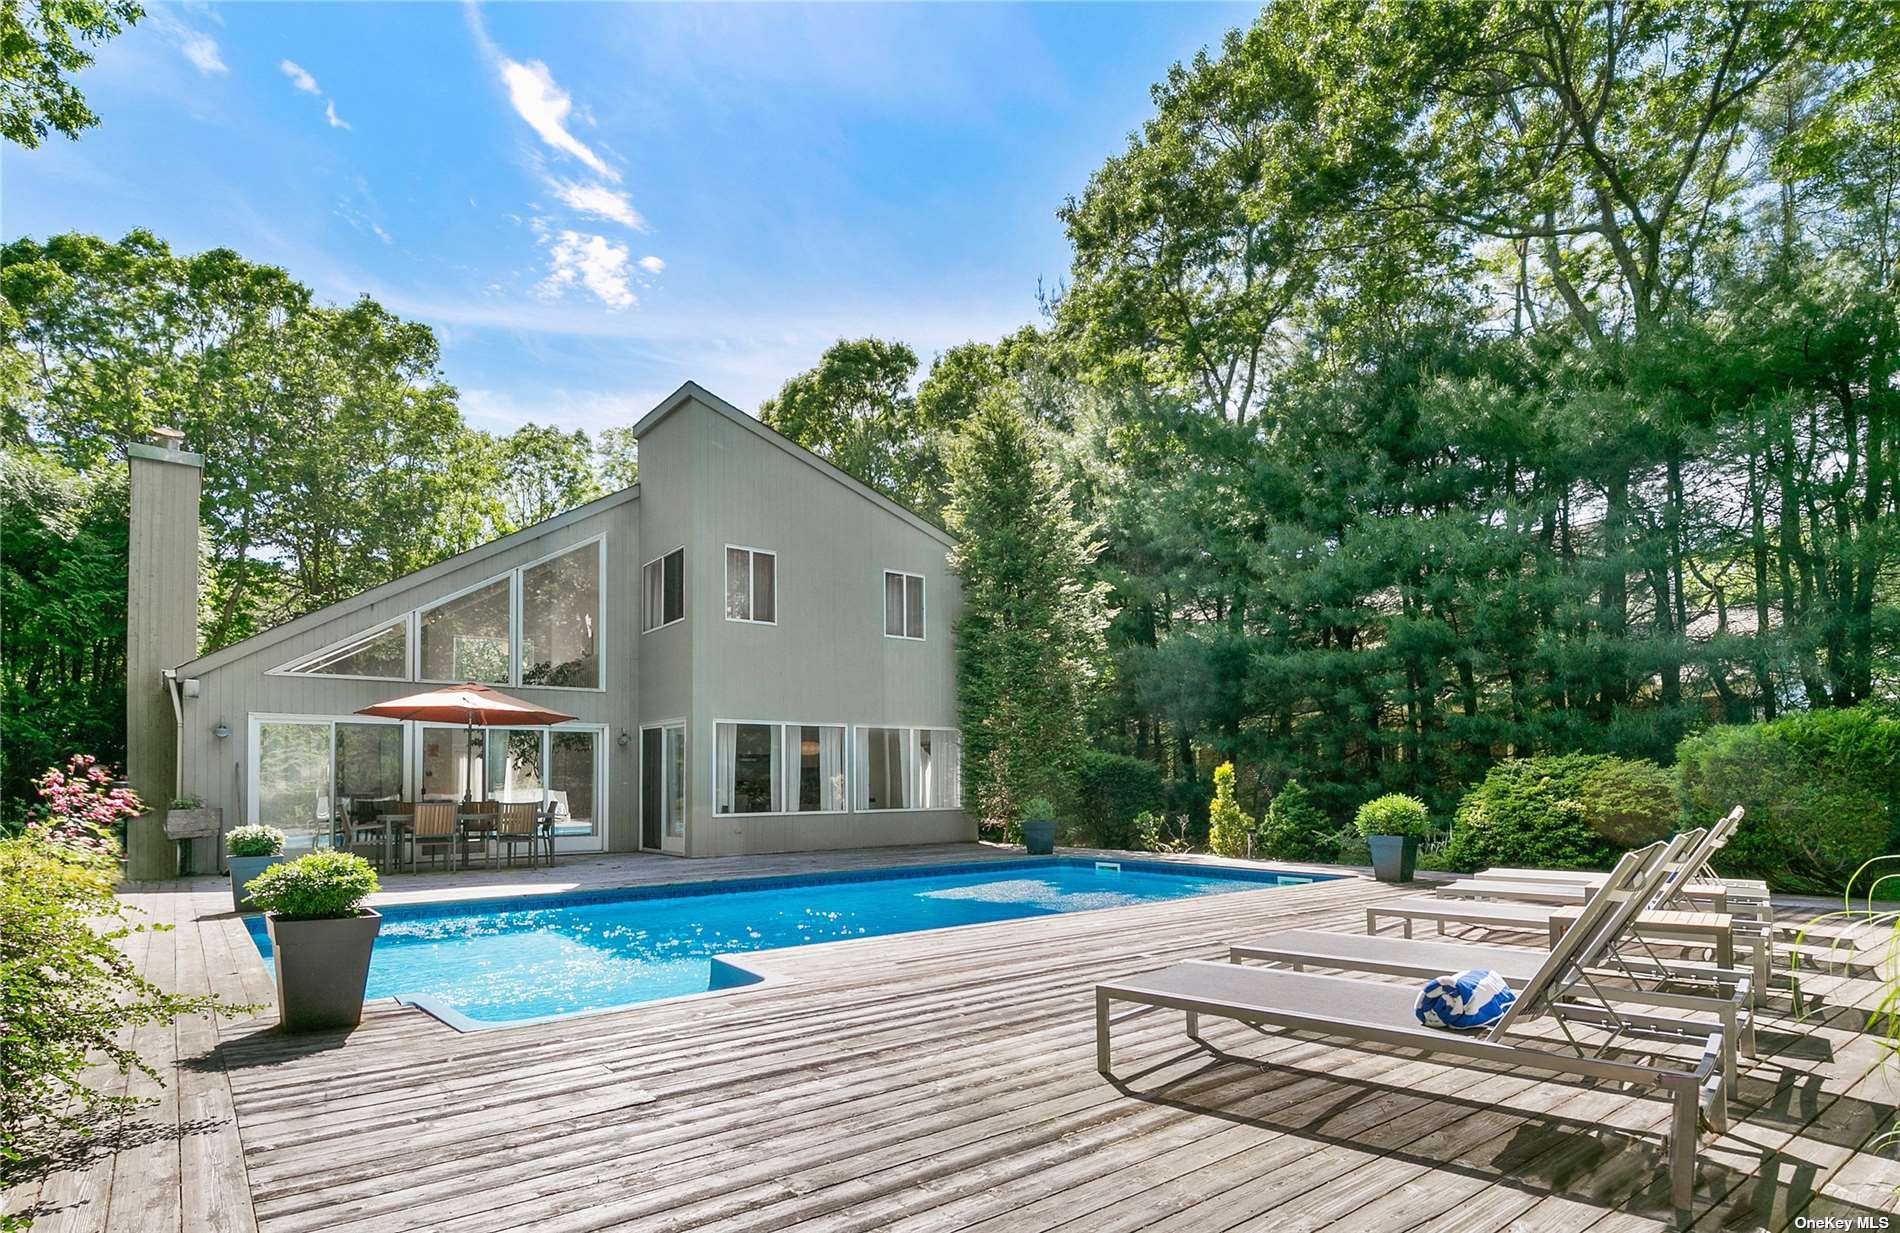 Property for Sale at 24 Quogue Riverhead Road, Quogue, Hamptons, NY - Bedrooms: 3 
Bathrooms: 3  - $1,450,000